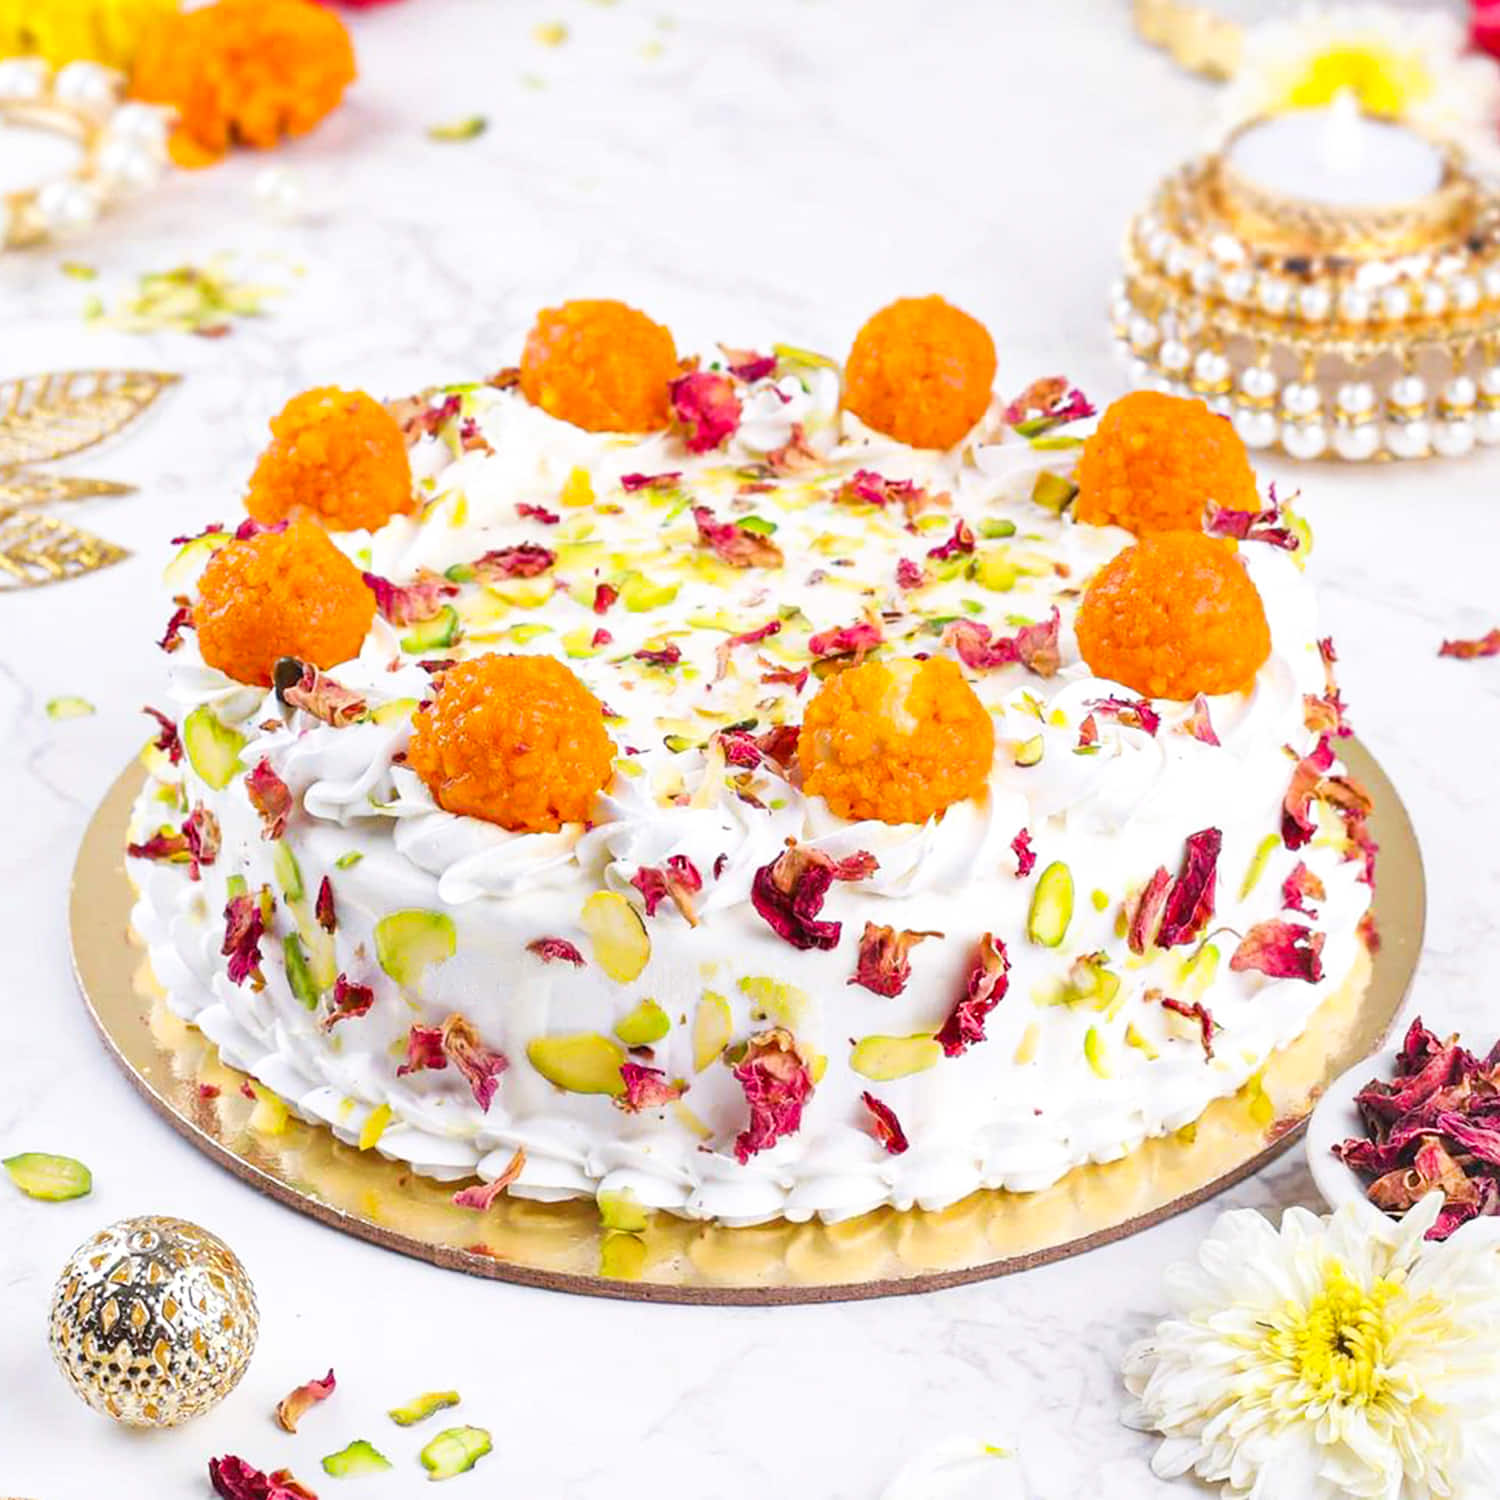 Best Motichoor Laddu Cake In Mumbai | Order Online